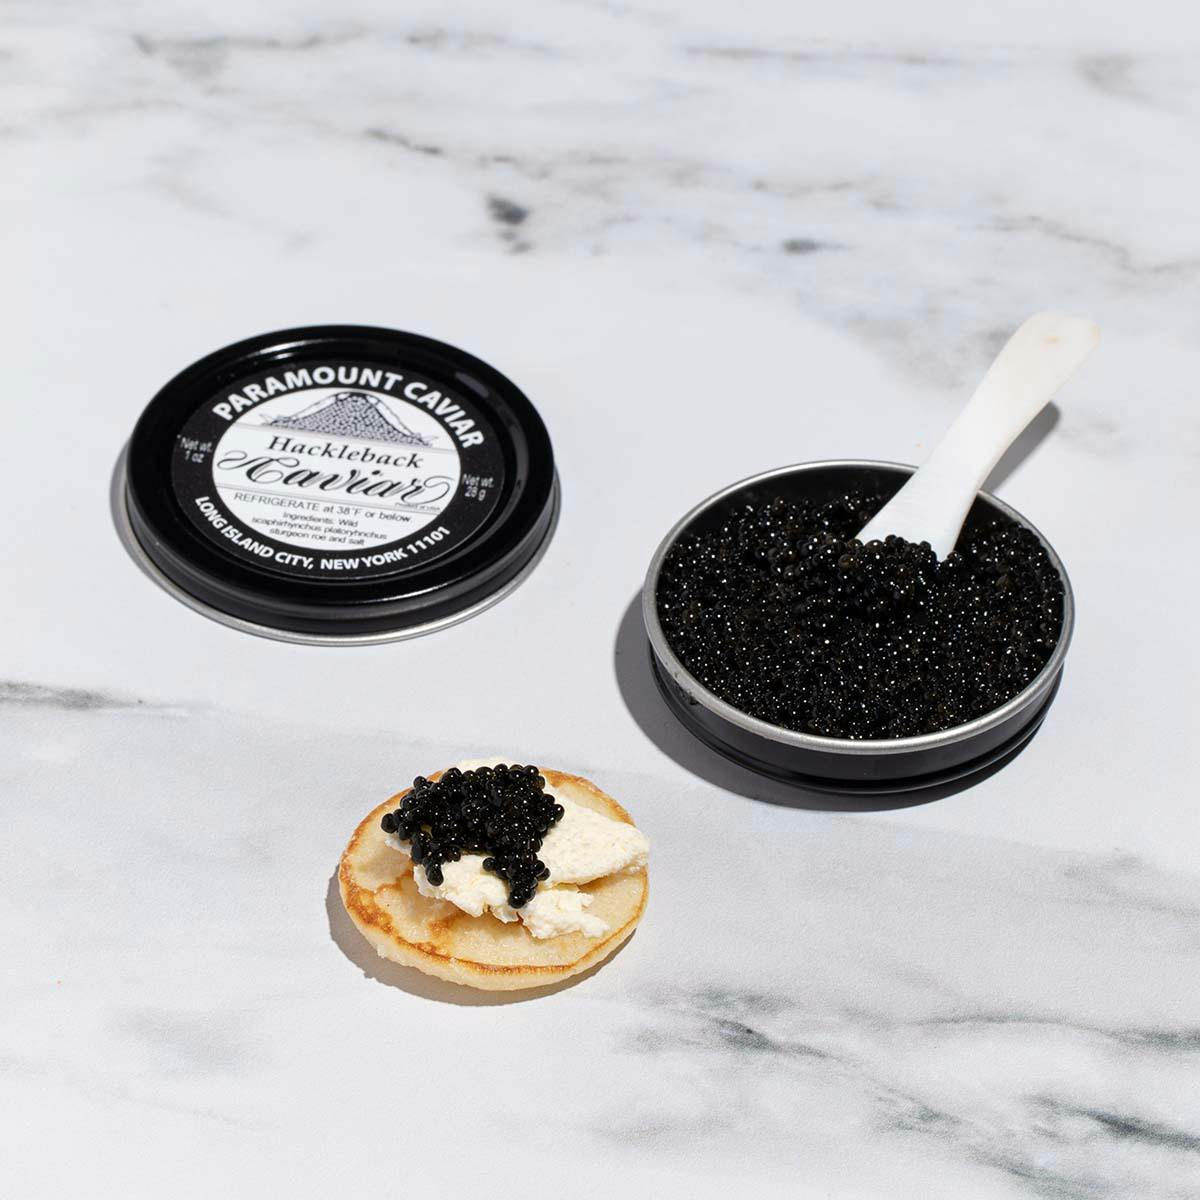 The Ordinary - American Caviar Service, Hackleback Caviar, Johnny Cakes +  Traditional Accompaniments